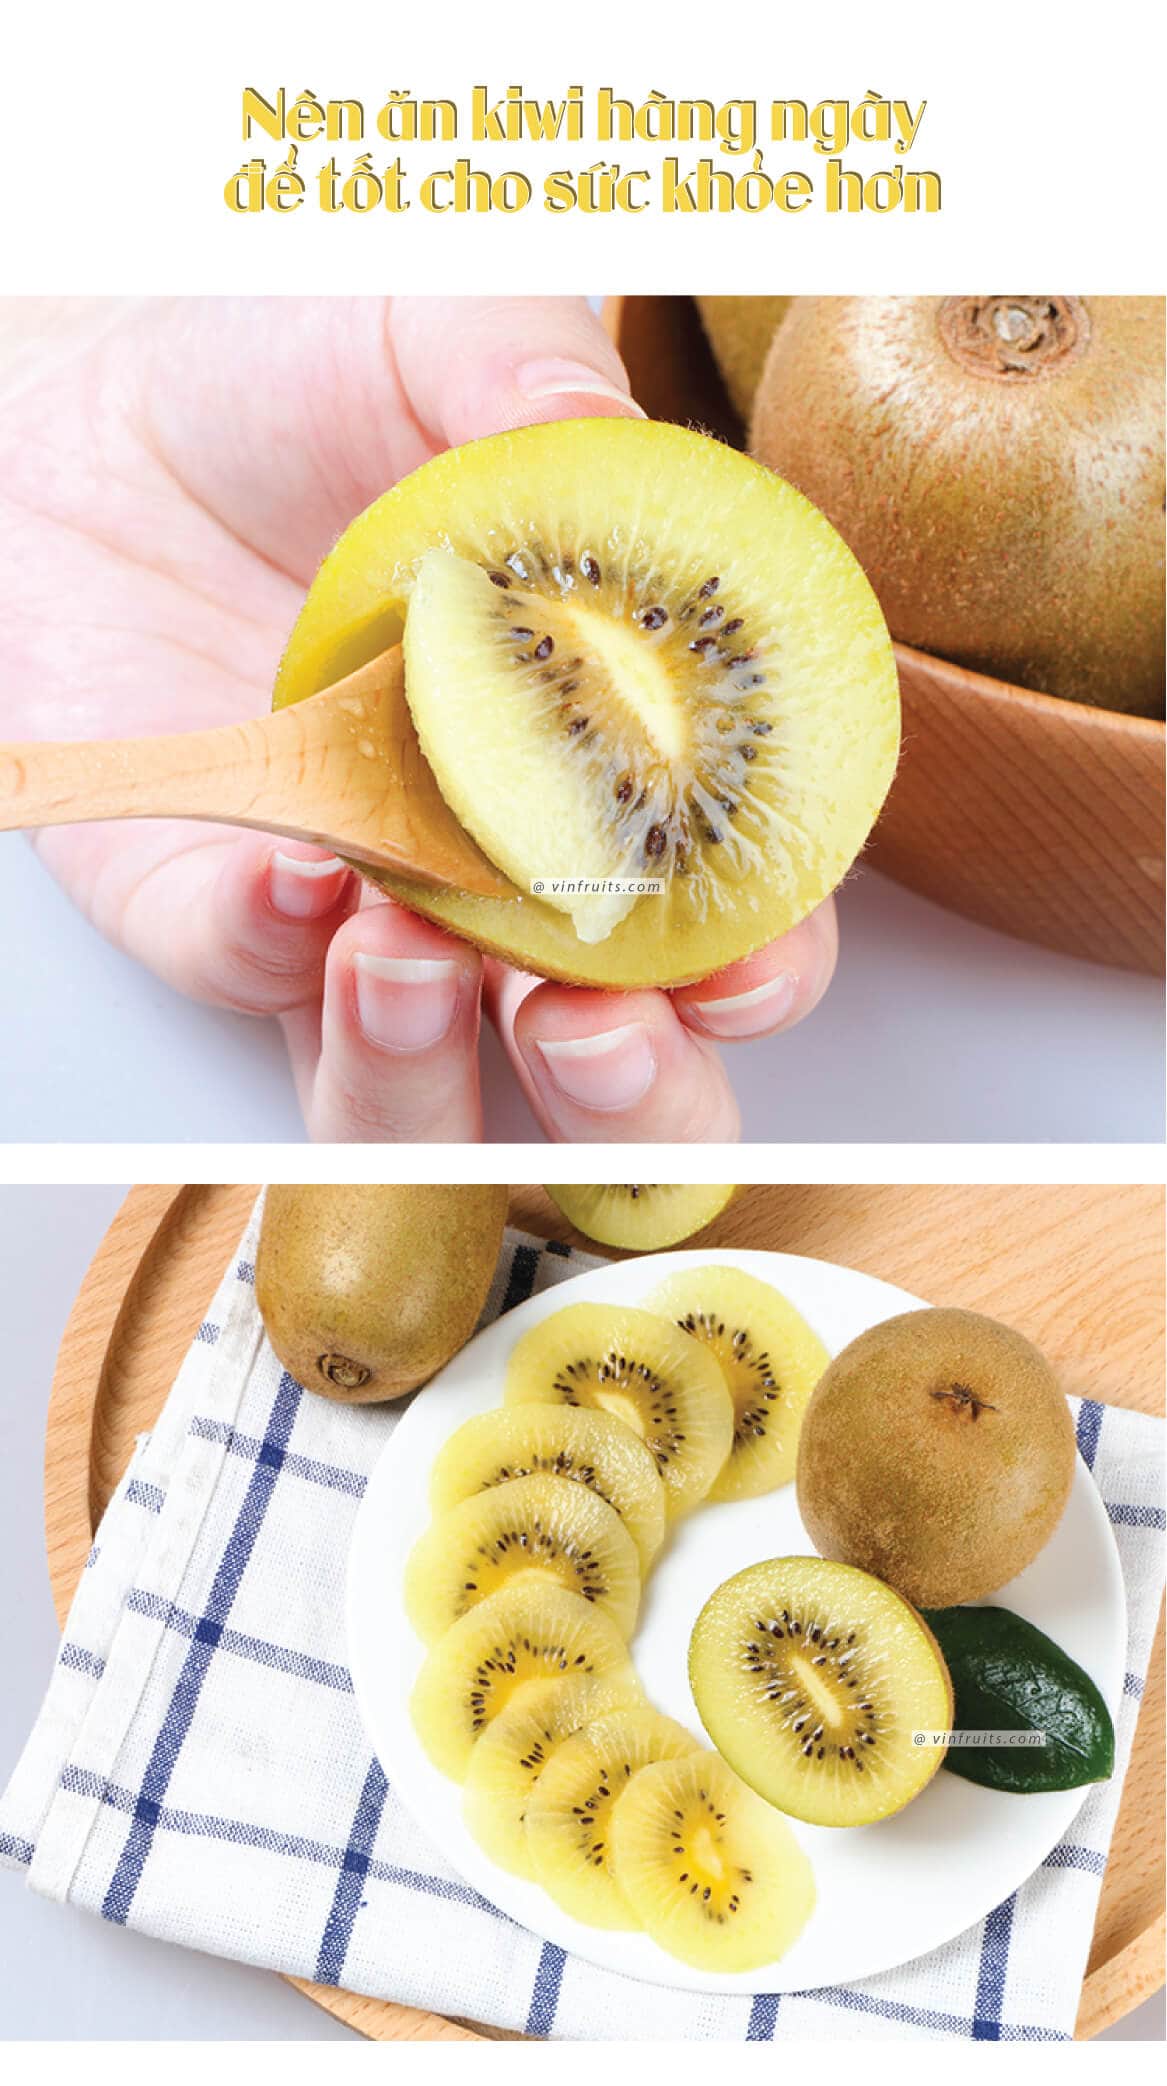 Mua kiwi vang New Zealand tai Vinfruits